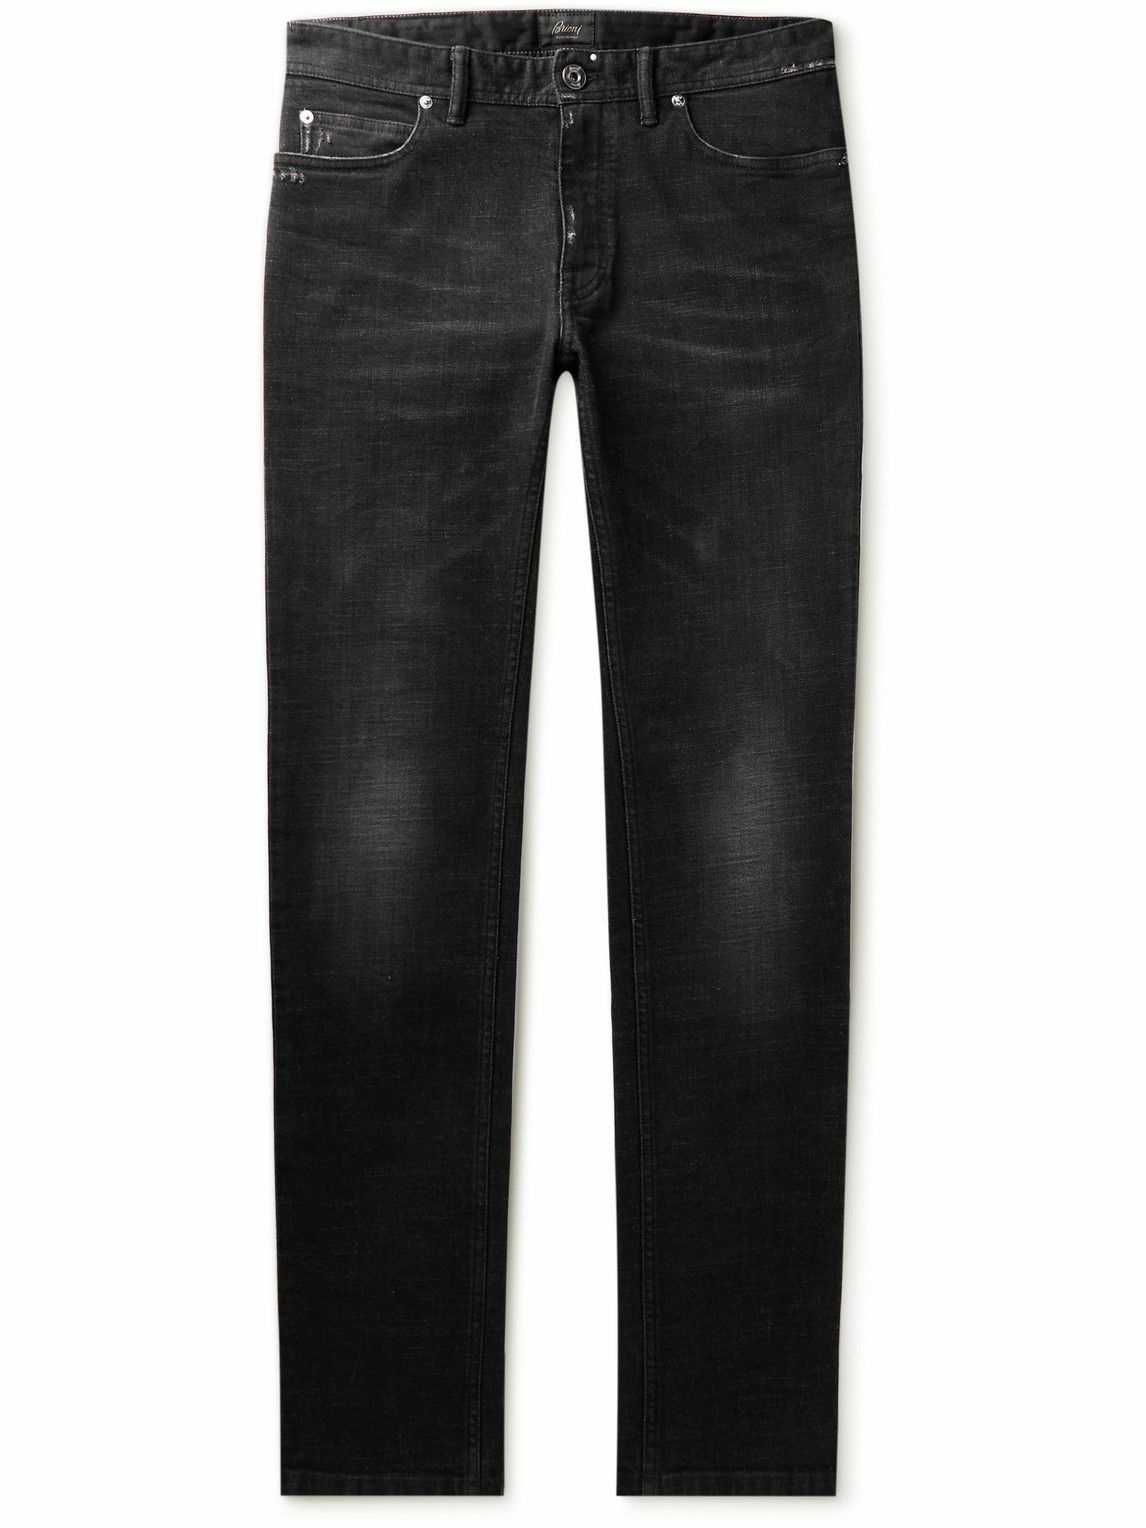 Brioni - Aspen Slim-Fit Jeans - Black Brioni